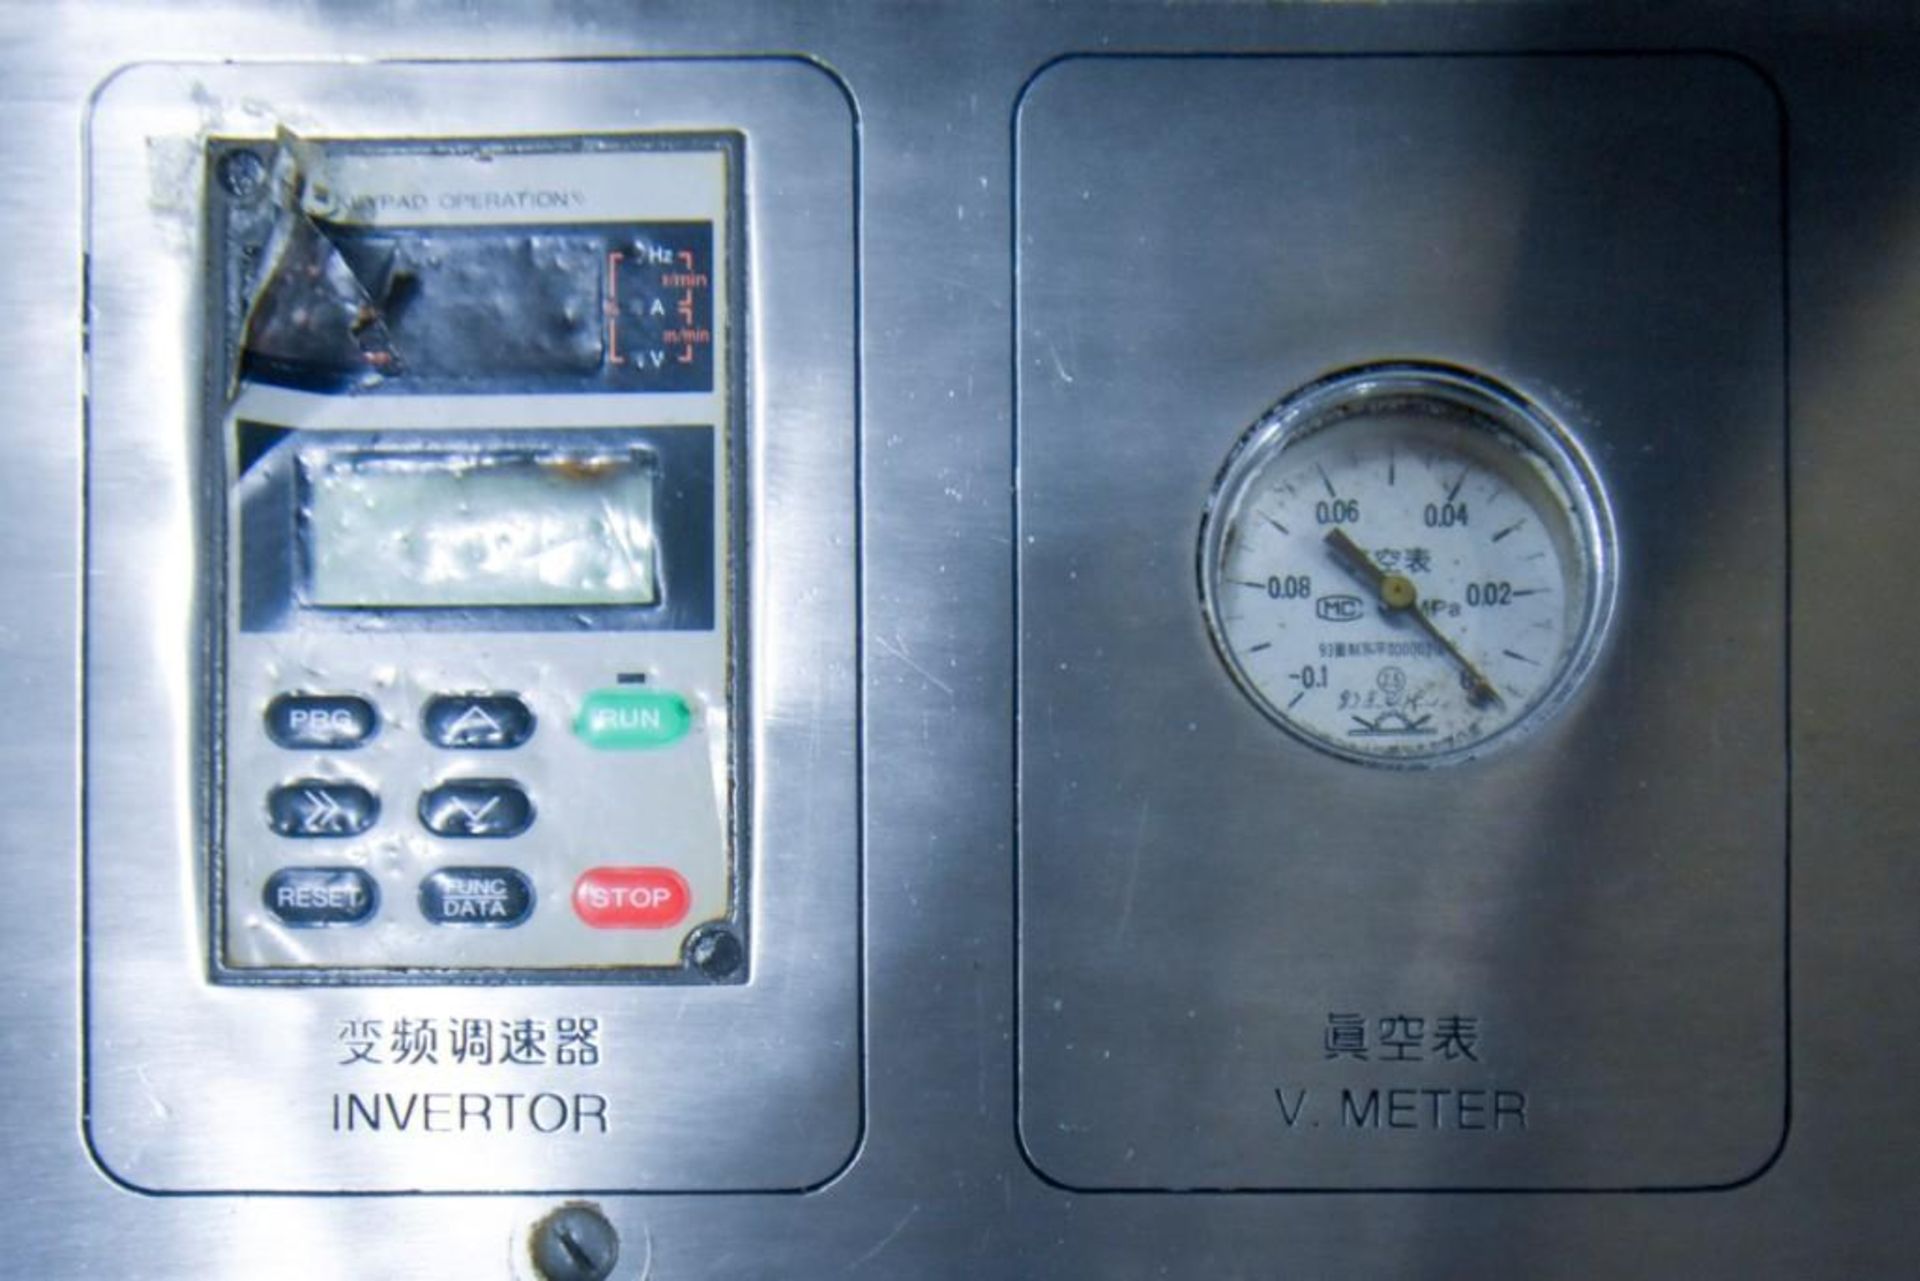 CFM- 800 Automatic Encapsulation Machine with size 0 Tooling - Image 9 of 14